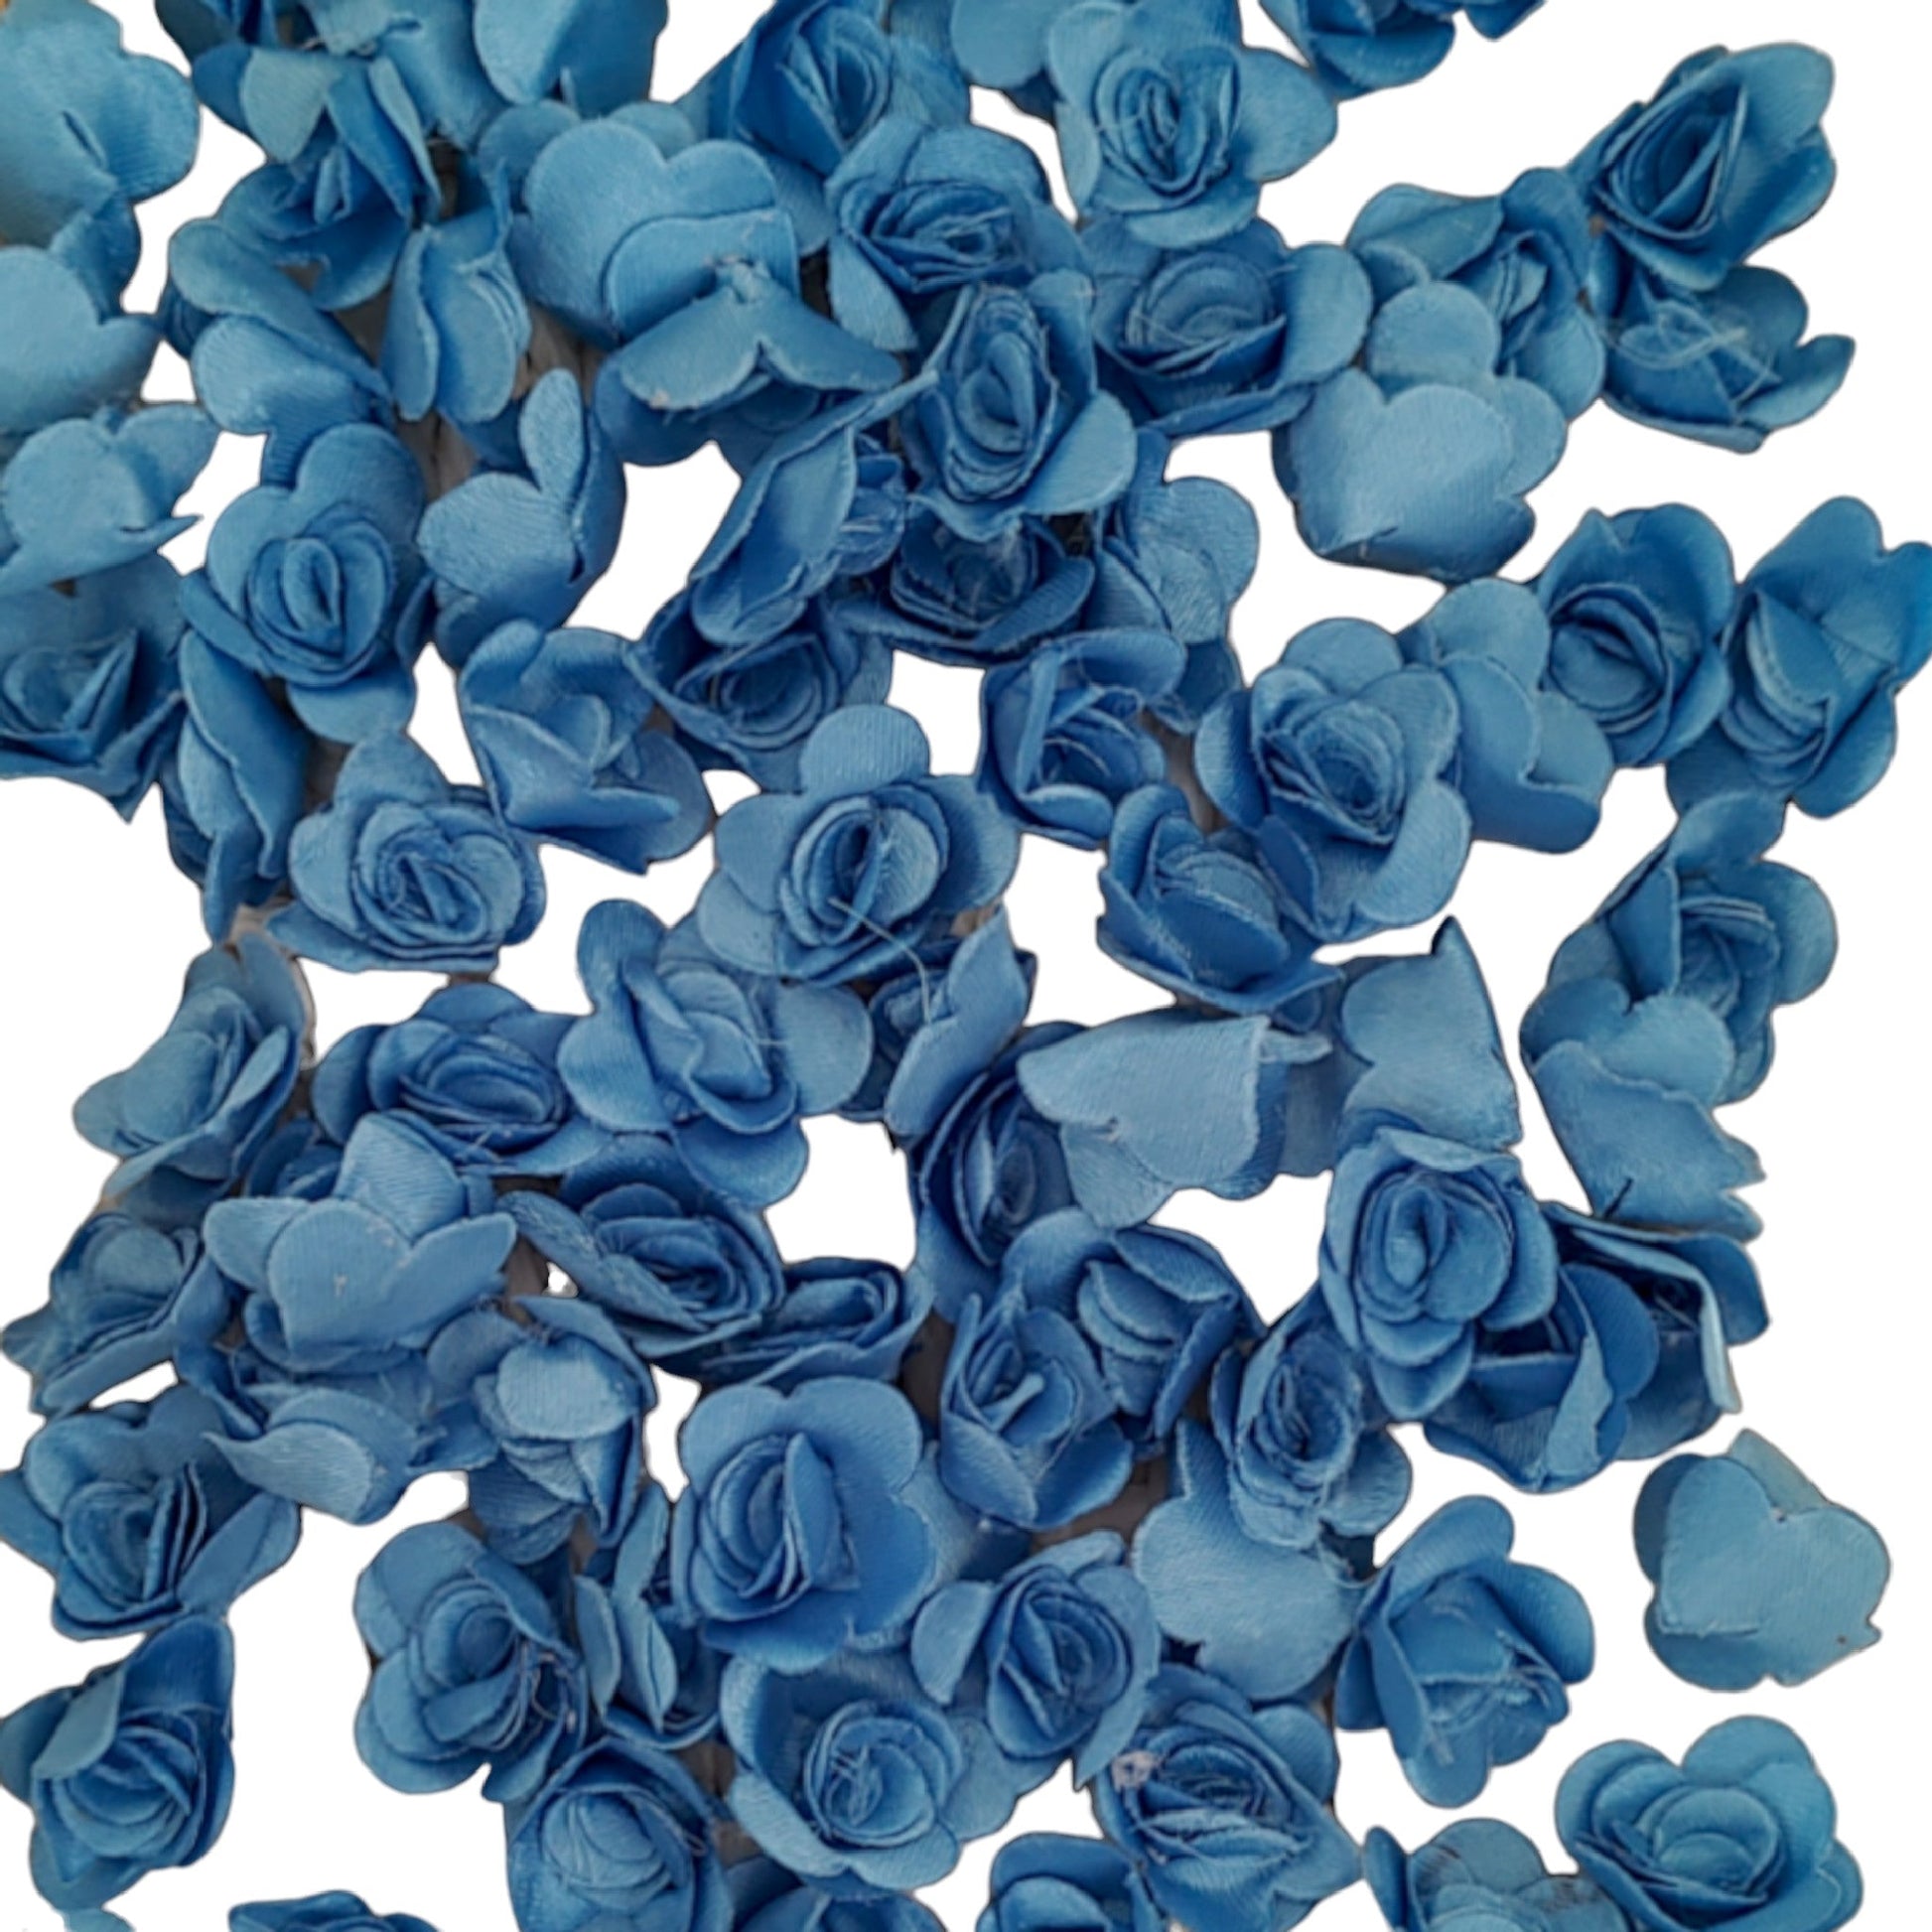 Decorative Artificial Mini Rose Fabric Flower for Decor Craft or Textile - 11132